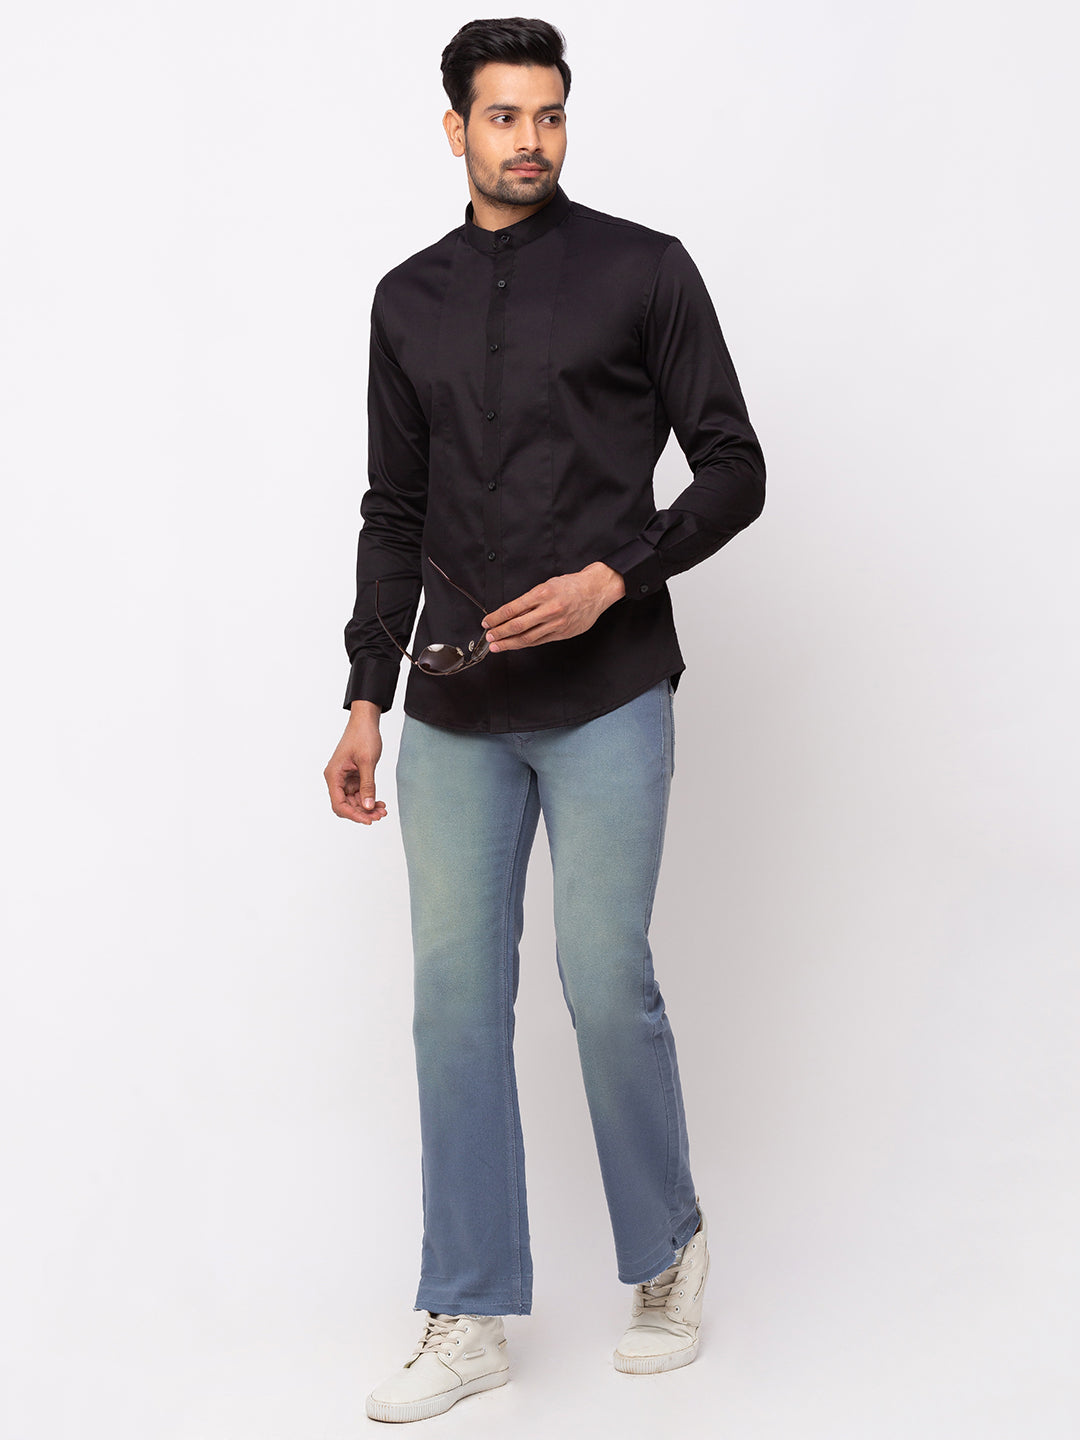 Black Formal Shirt with Mandarin Collar